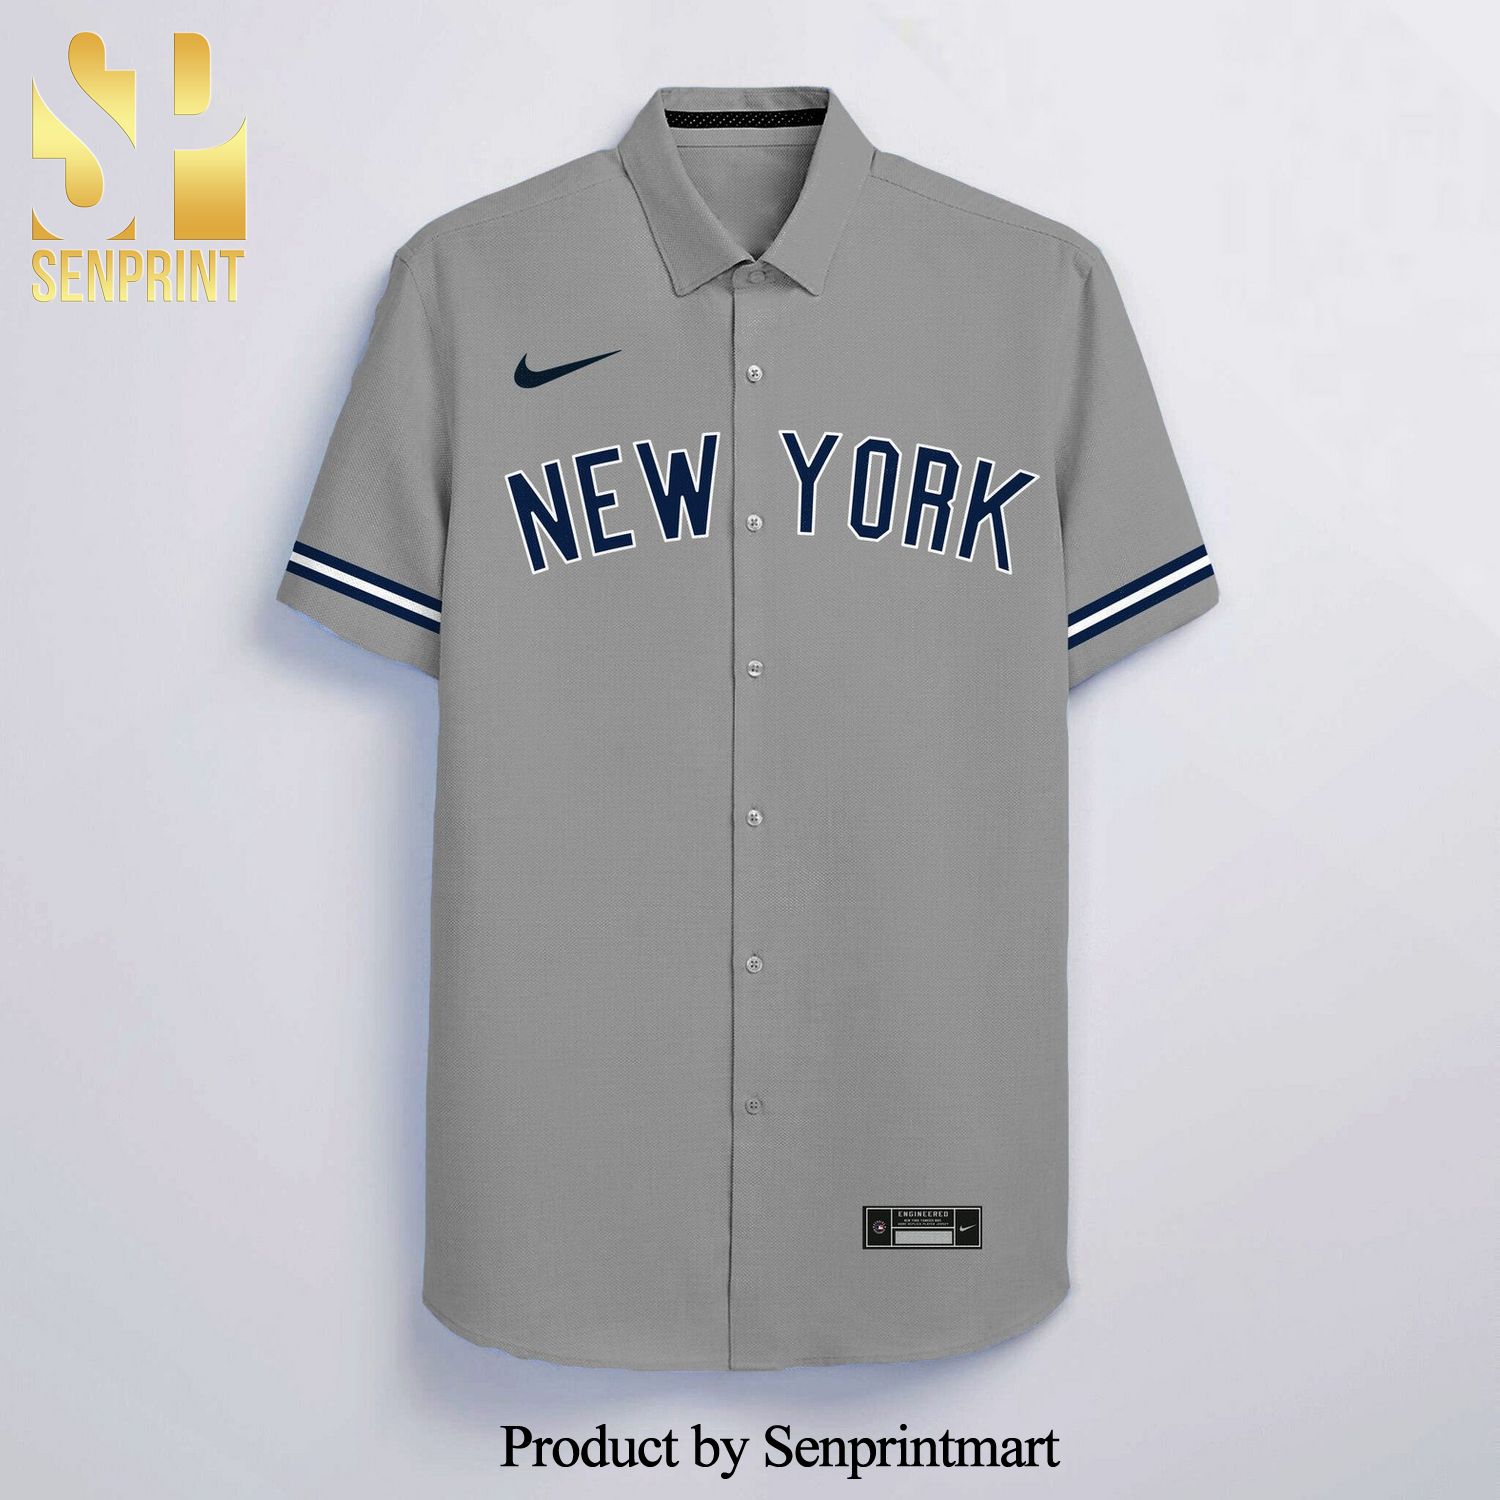 Custom New York Yankees Jerseys, Customized Yankees Shirts